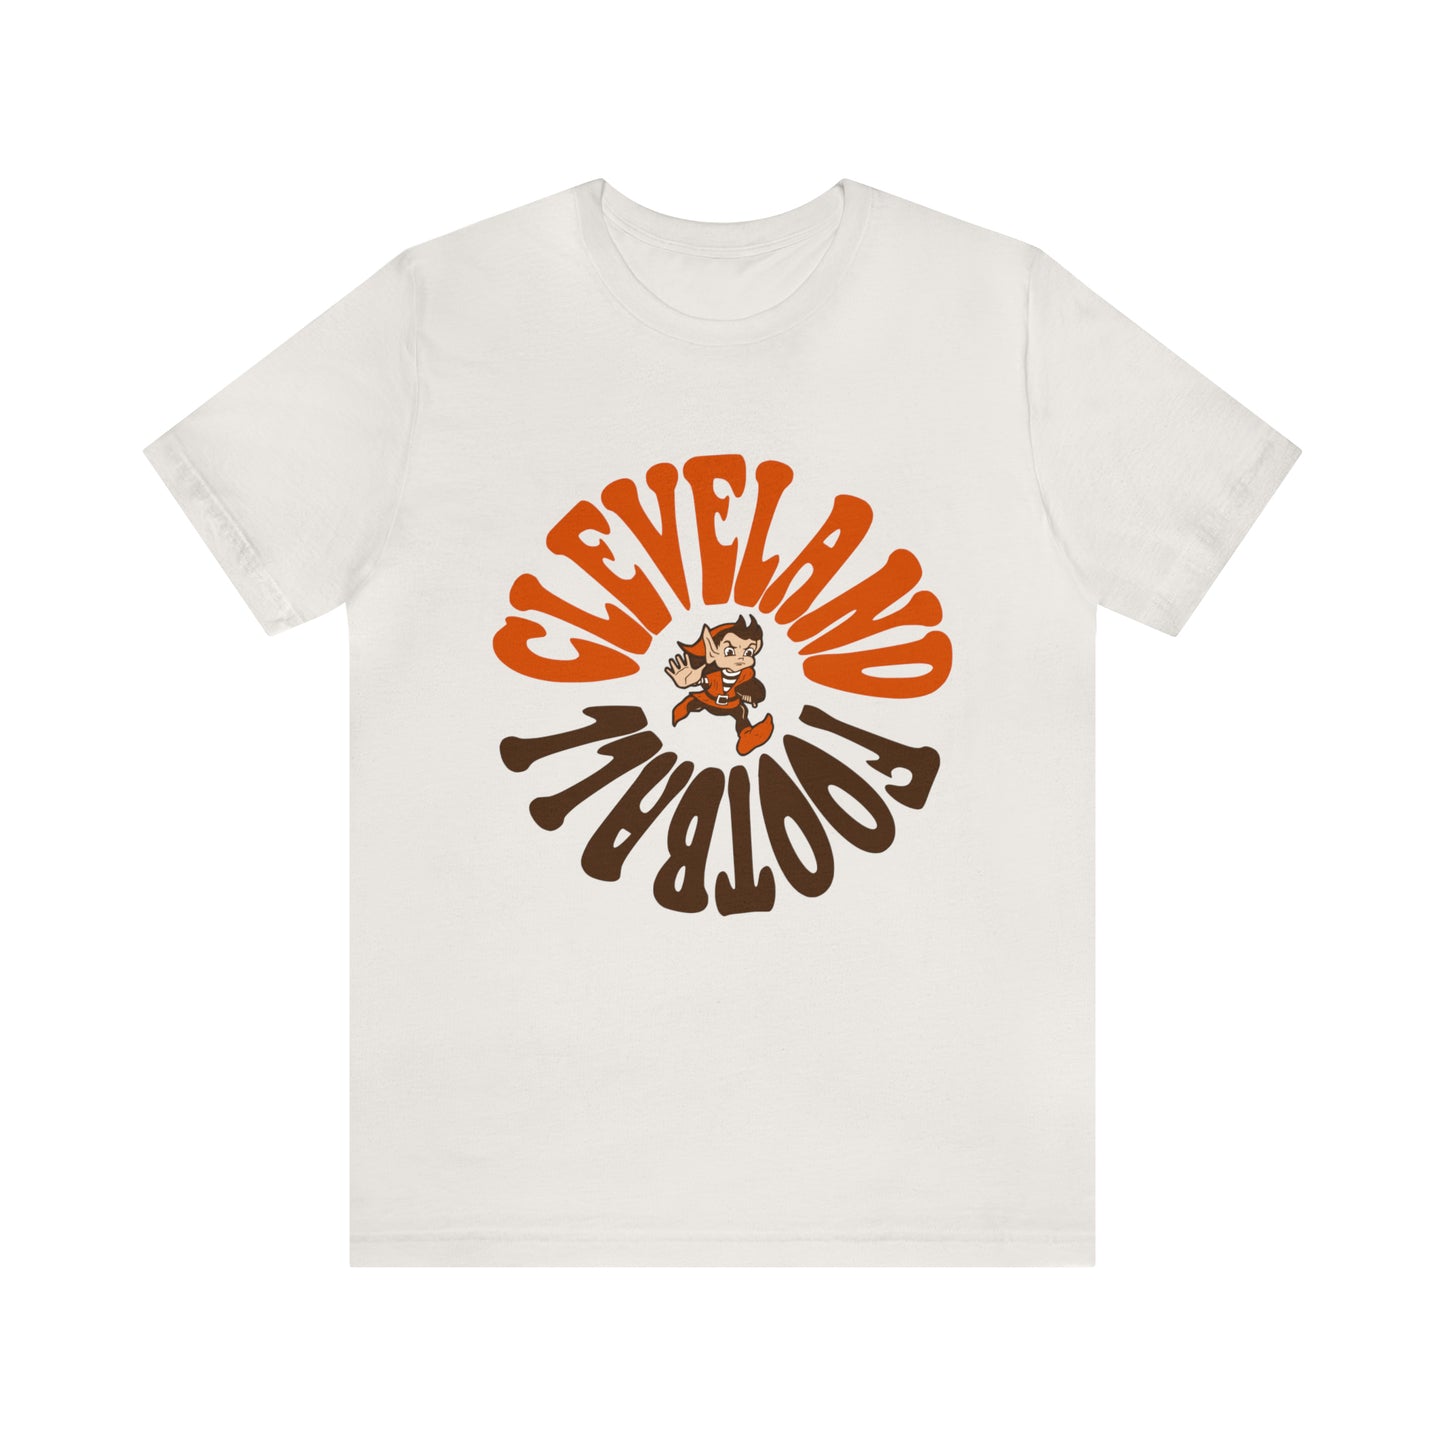 Hippy Cleveland Browns T-Shirt - Vintage Brownie Elf Cleveland Browns NFL Football Short Sleeve Tee - Retro Fan Gear Apparel Teem - Design 6